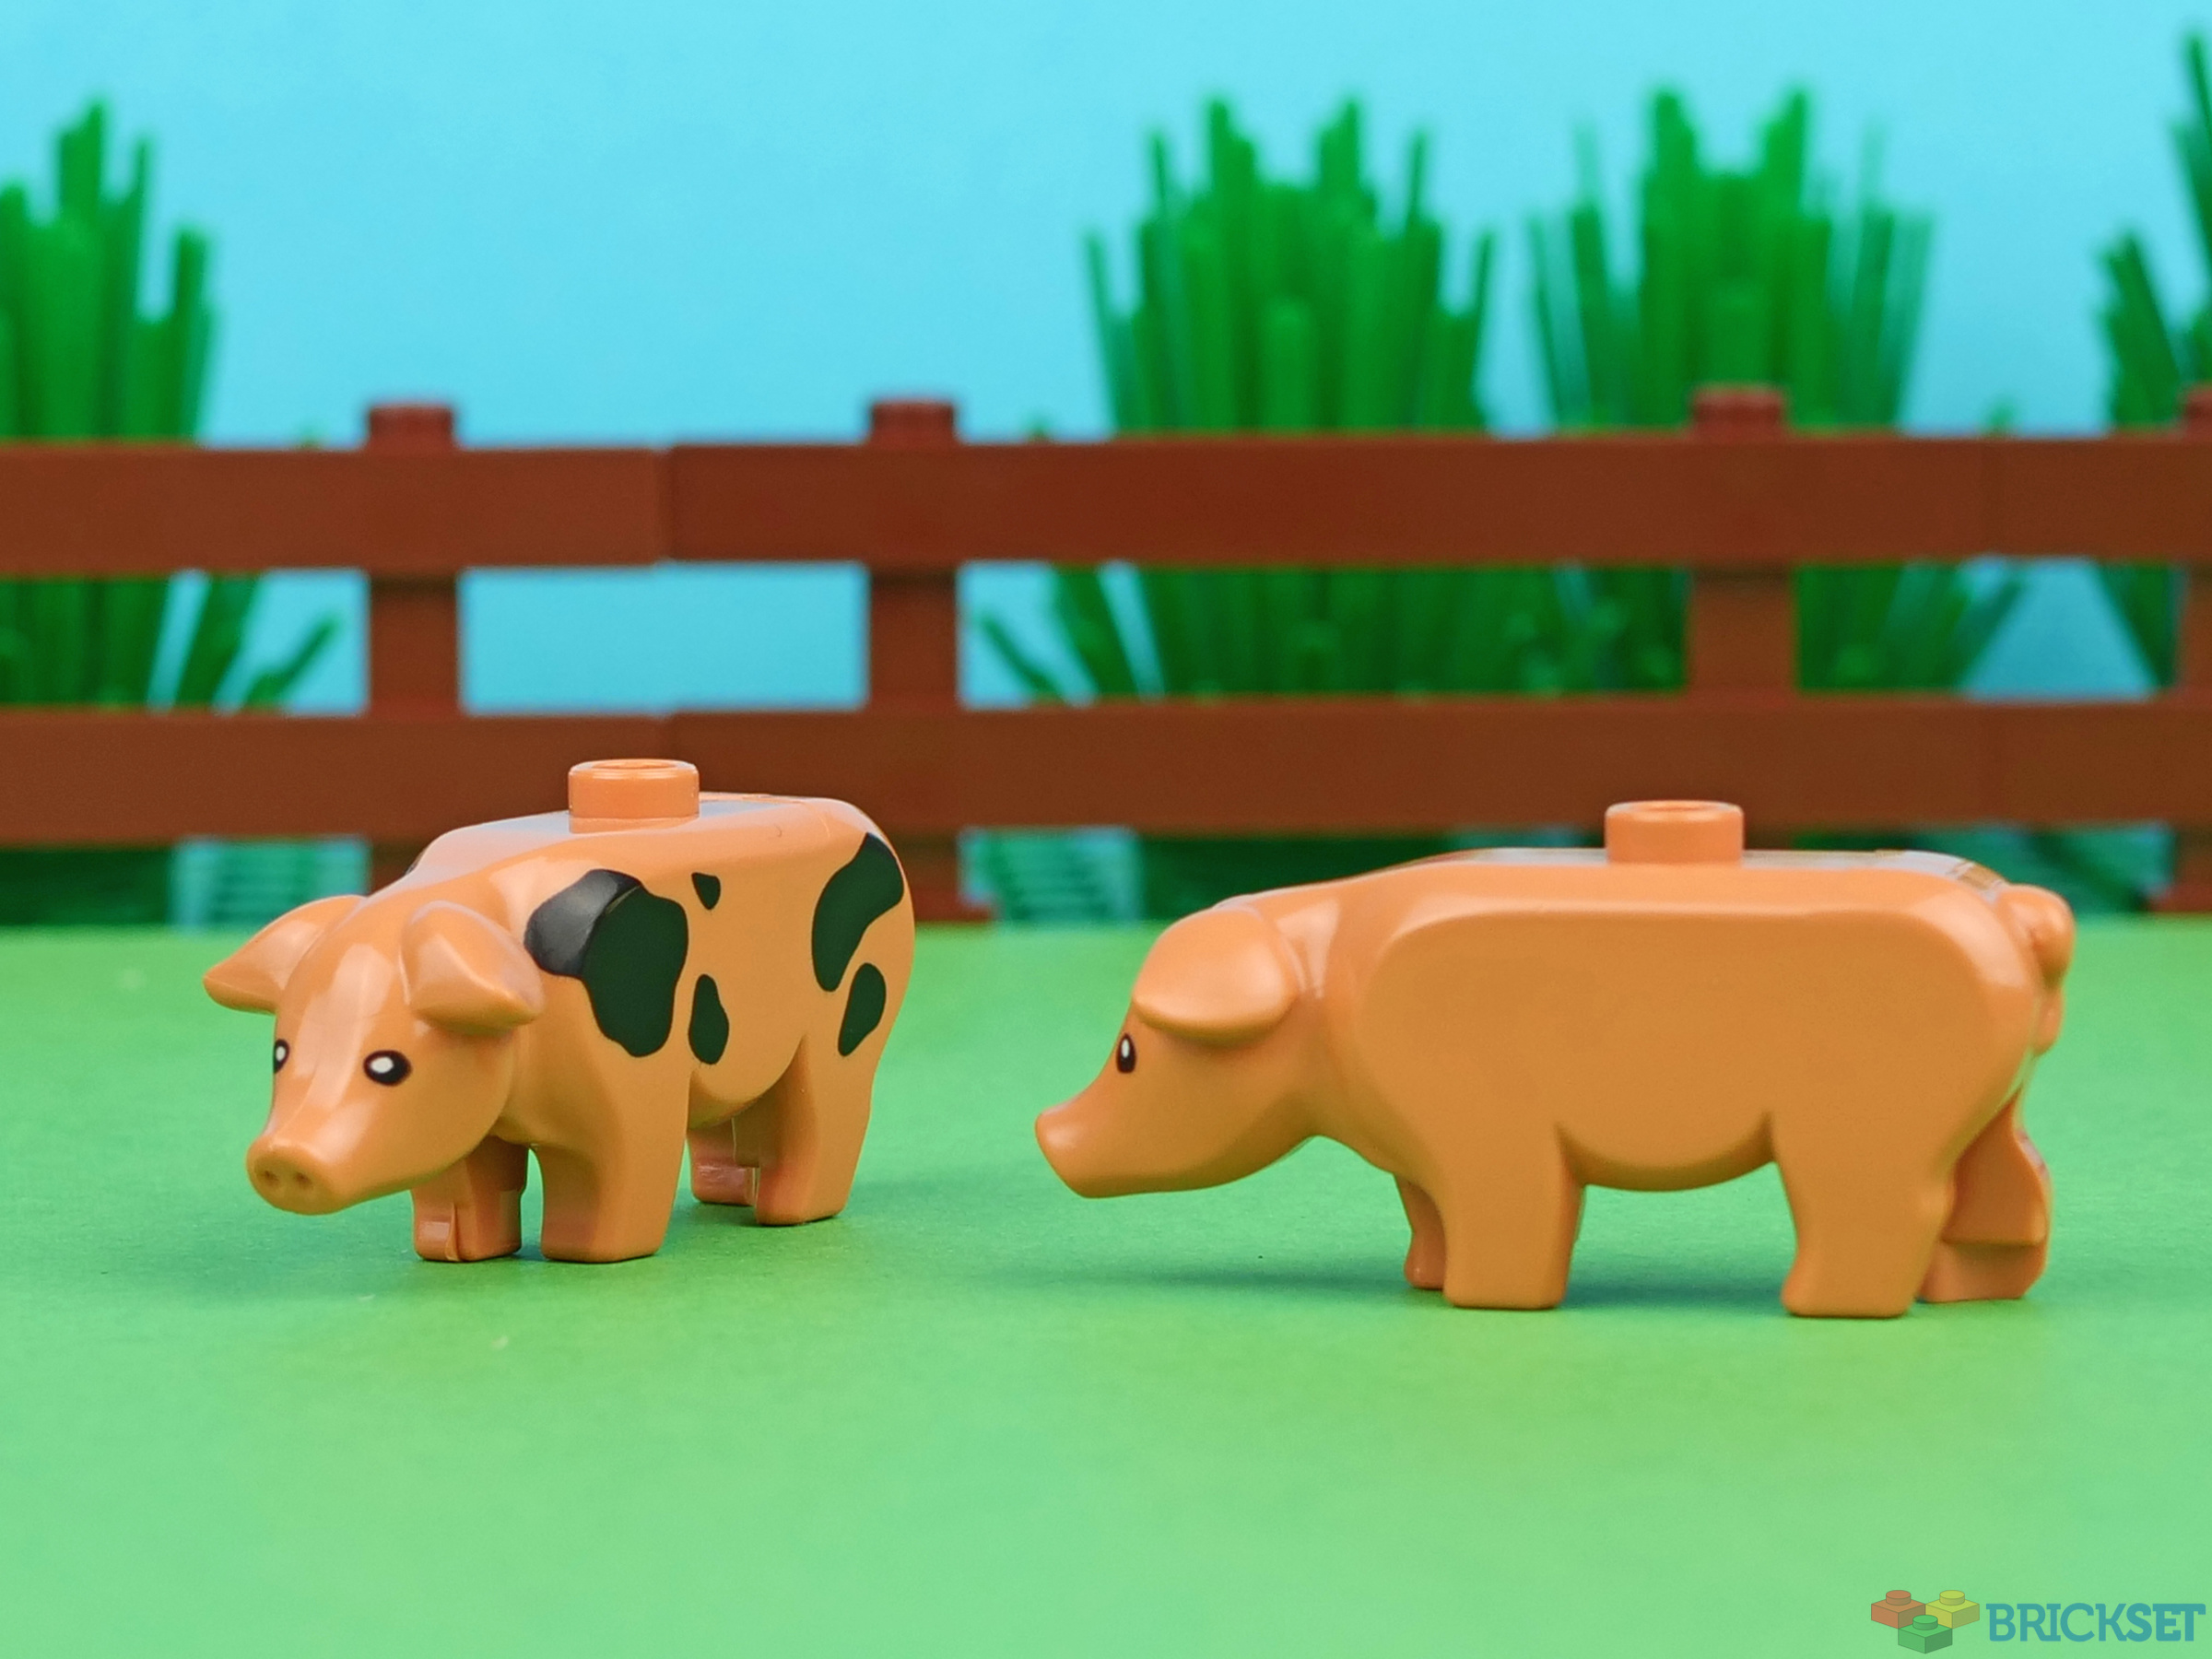 A history of farmyard animals | Brickset